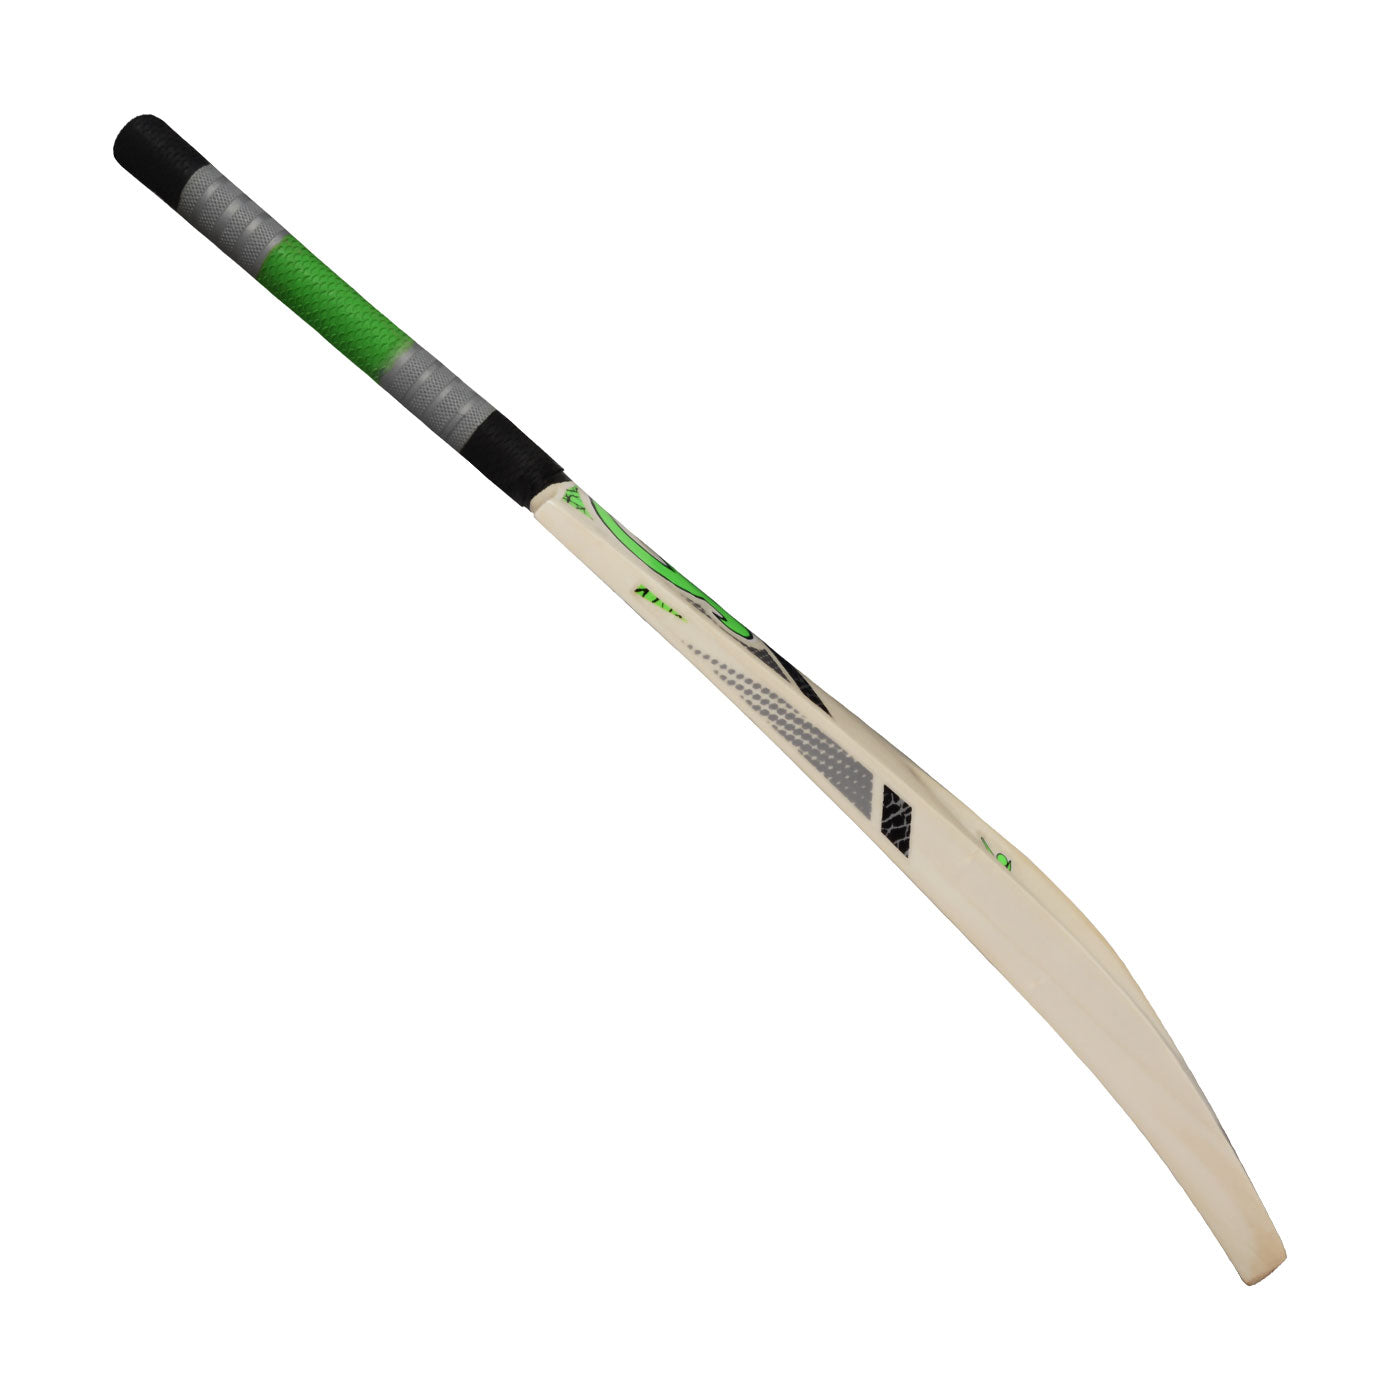 CA Vision 12000 tennis ball - tape ball cricket bat (Natural classic)